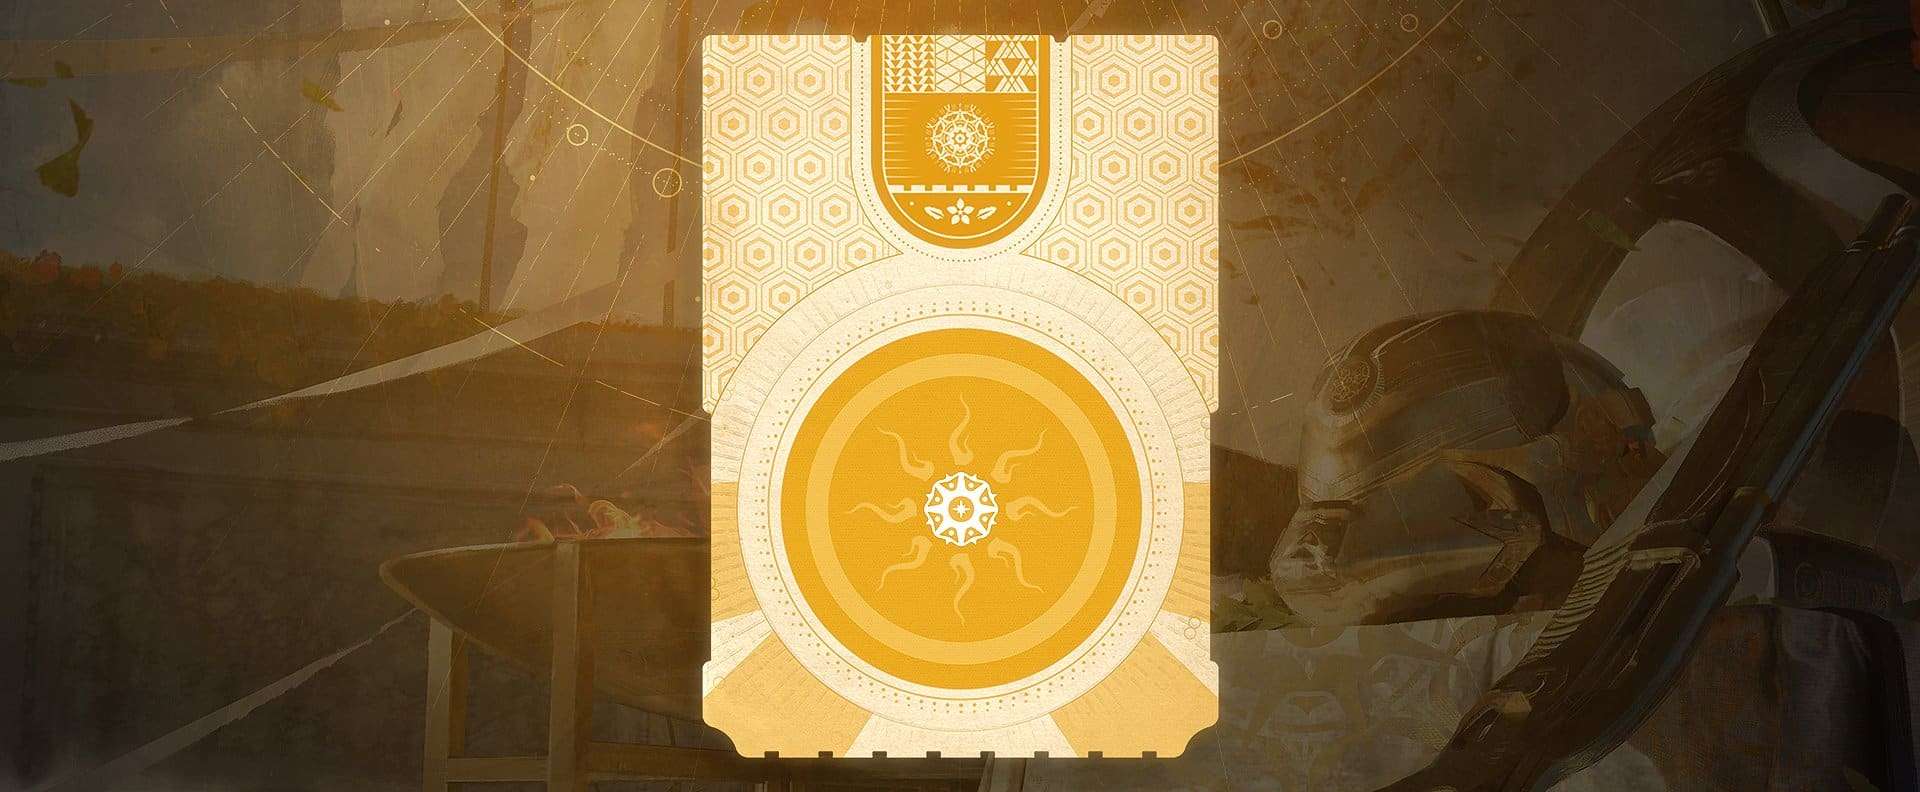 Destiny 2 Event Card key art